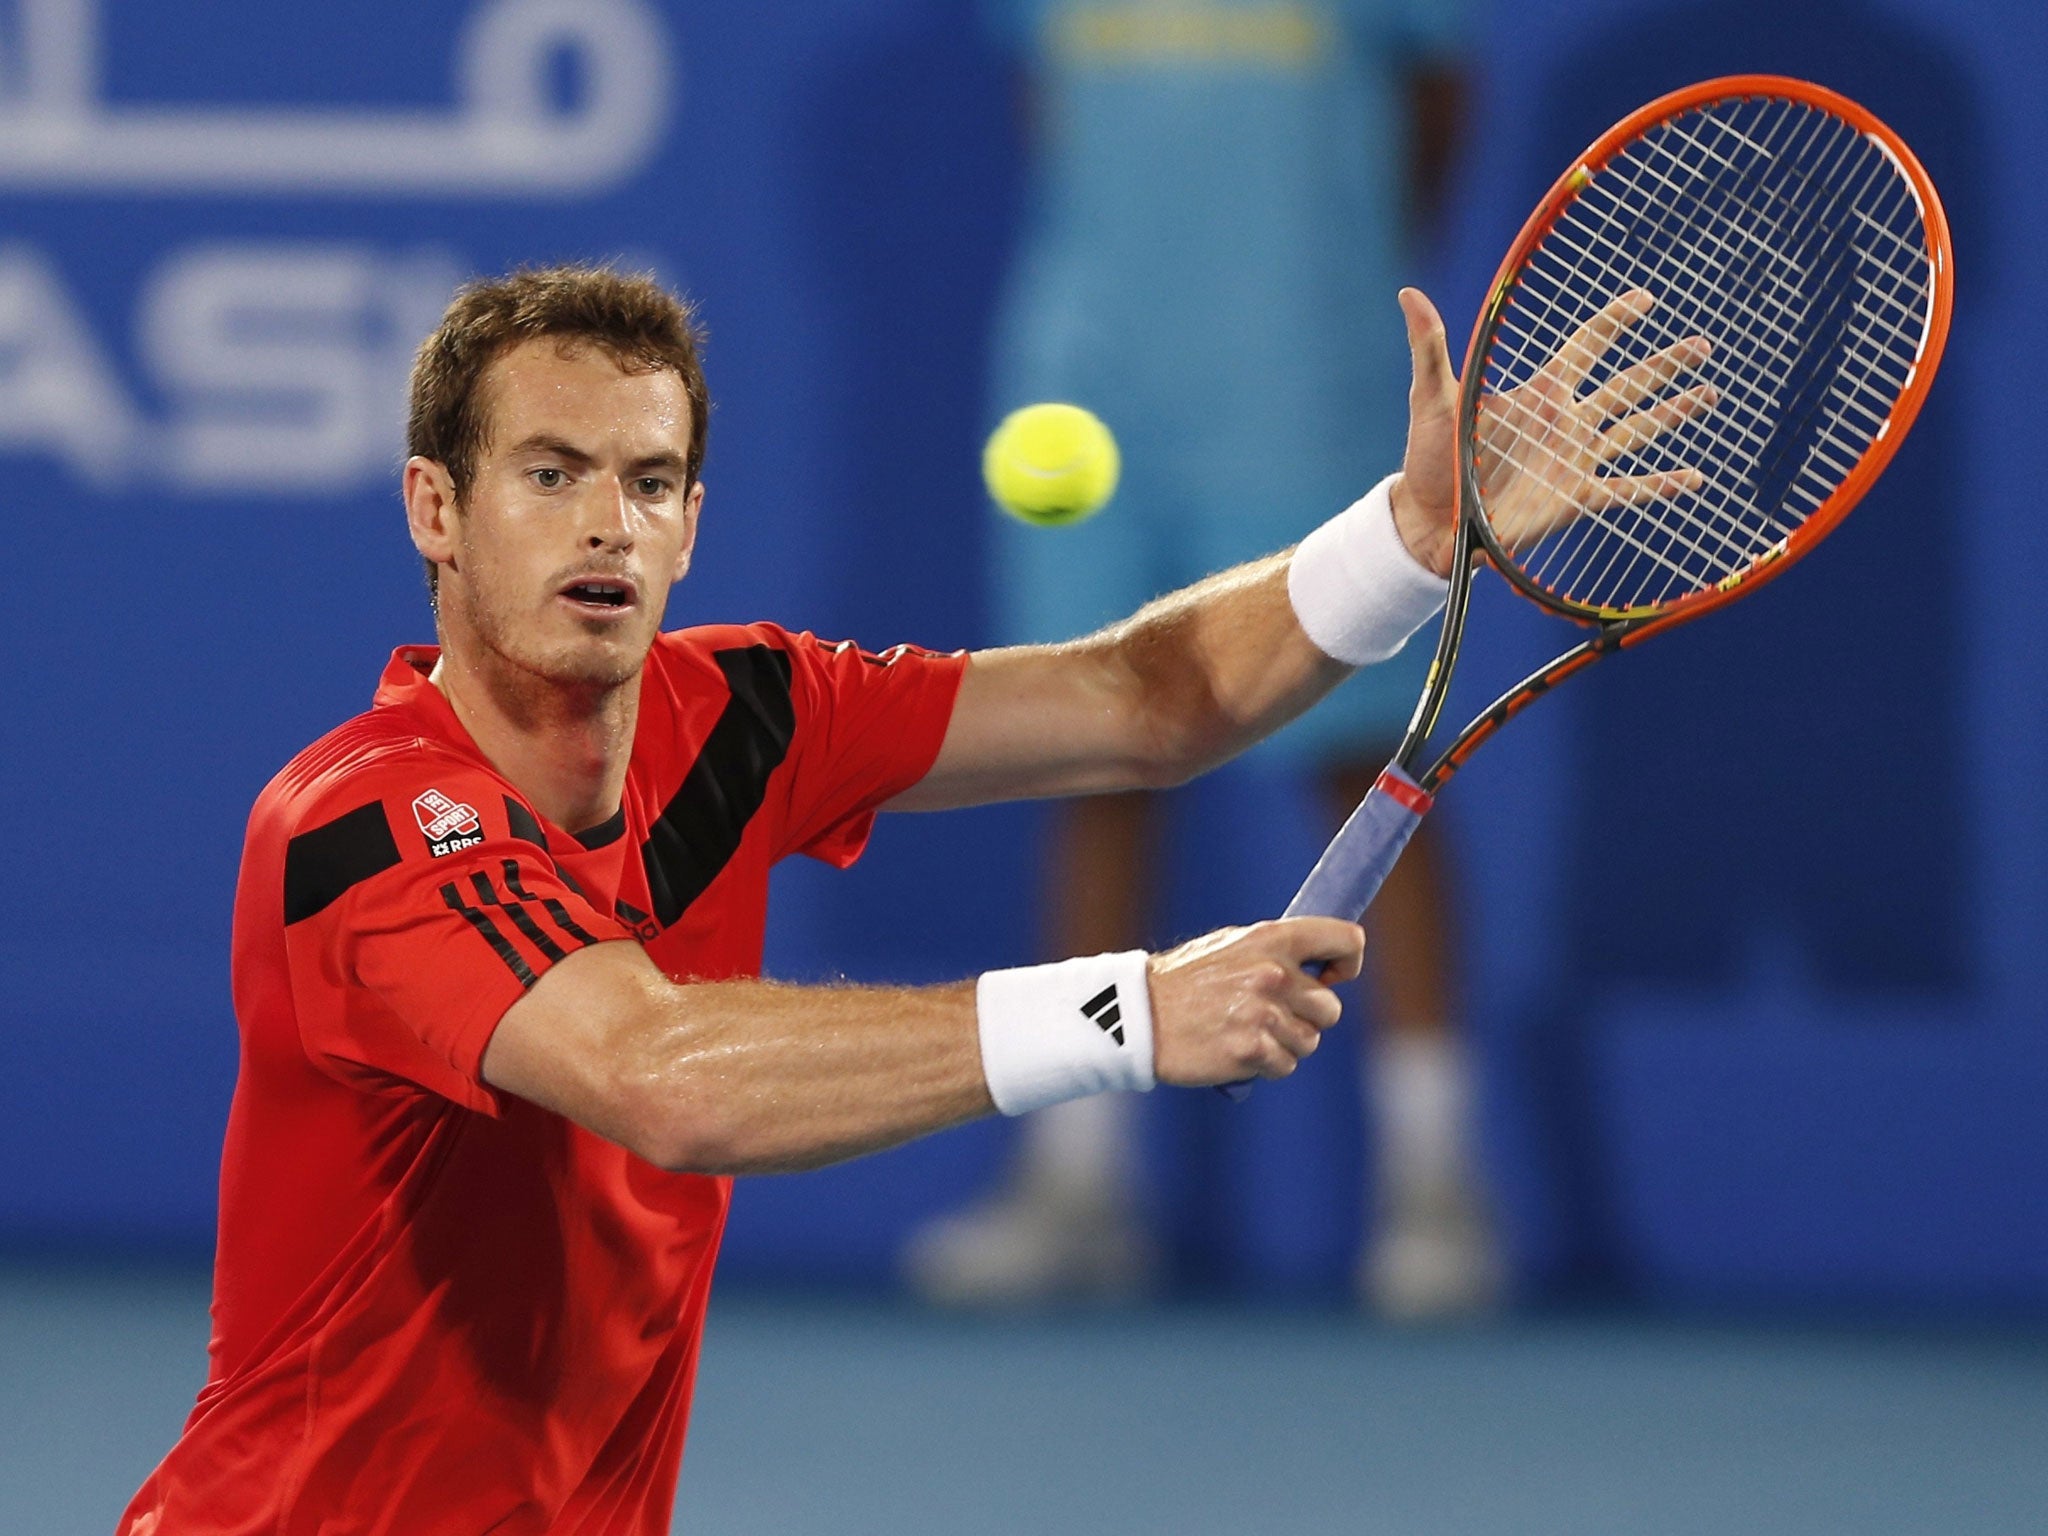 Andy Murray begins the new season in Doha this week